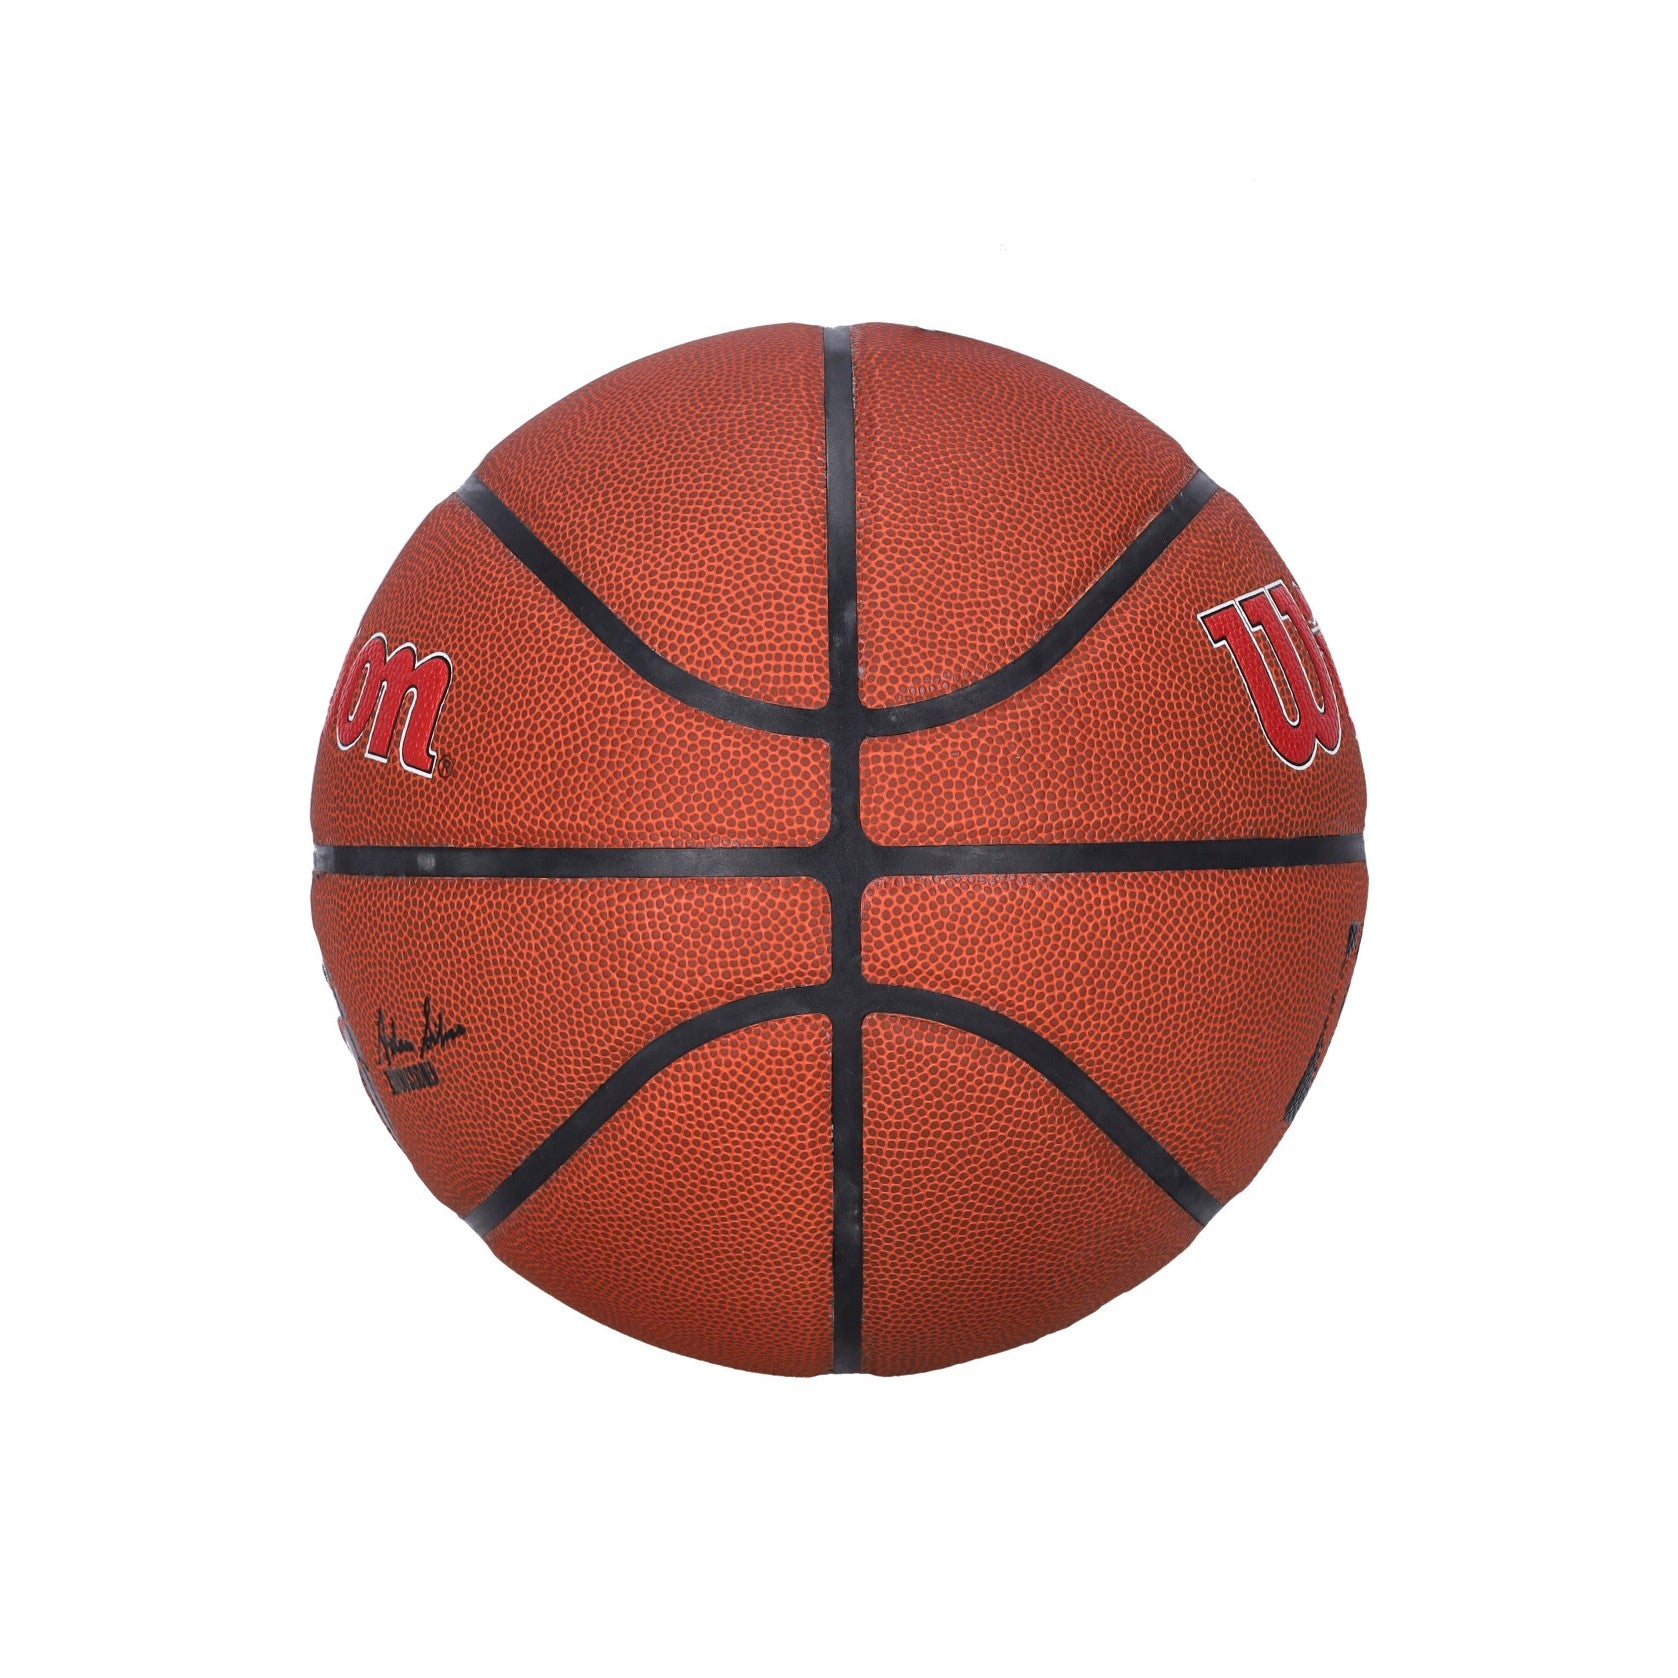 Men's NBA Team Alliance Basketball Size 7 Torrap Original Team Colors